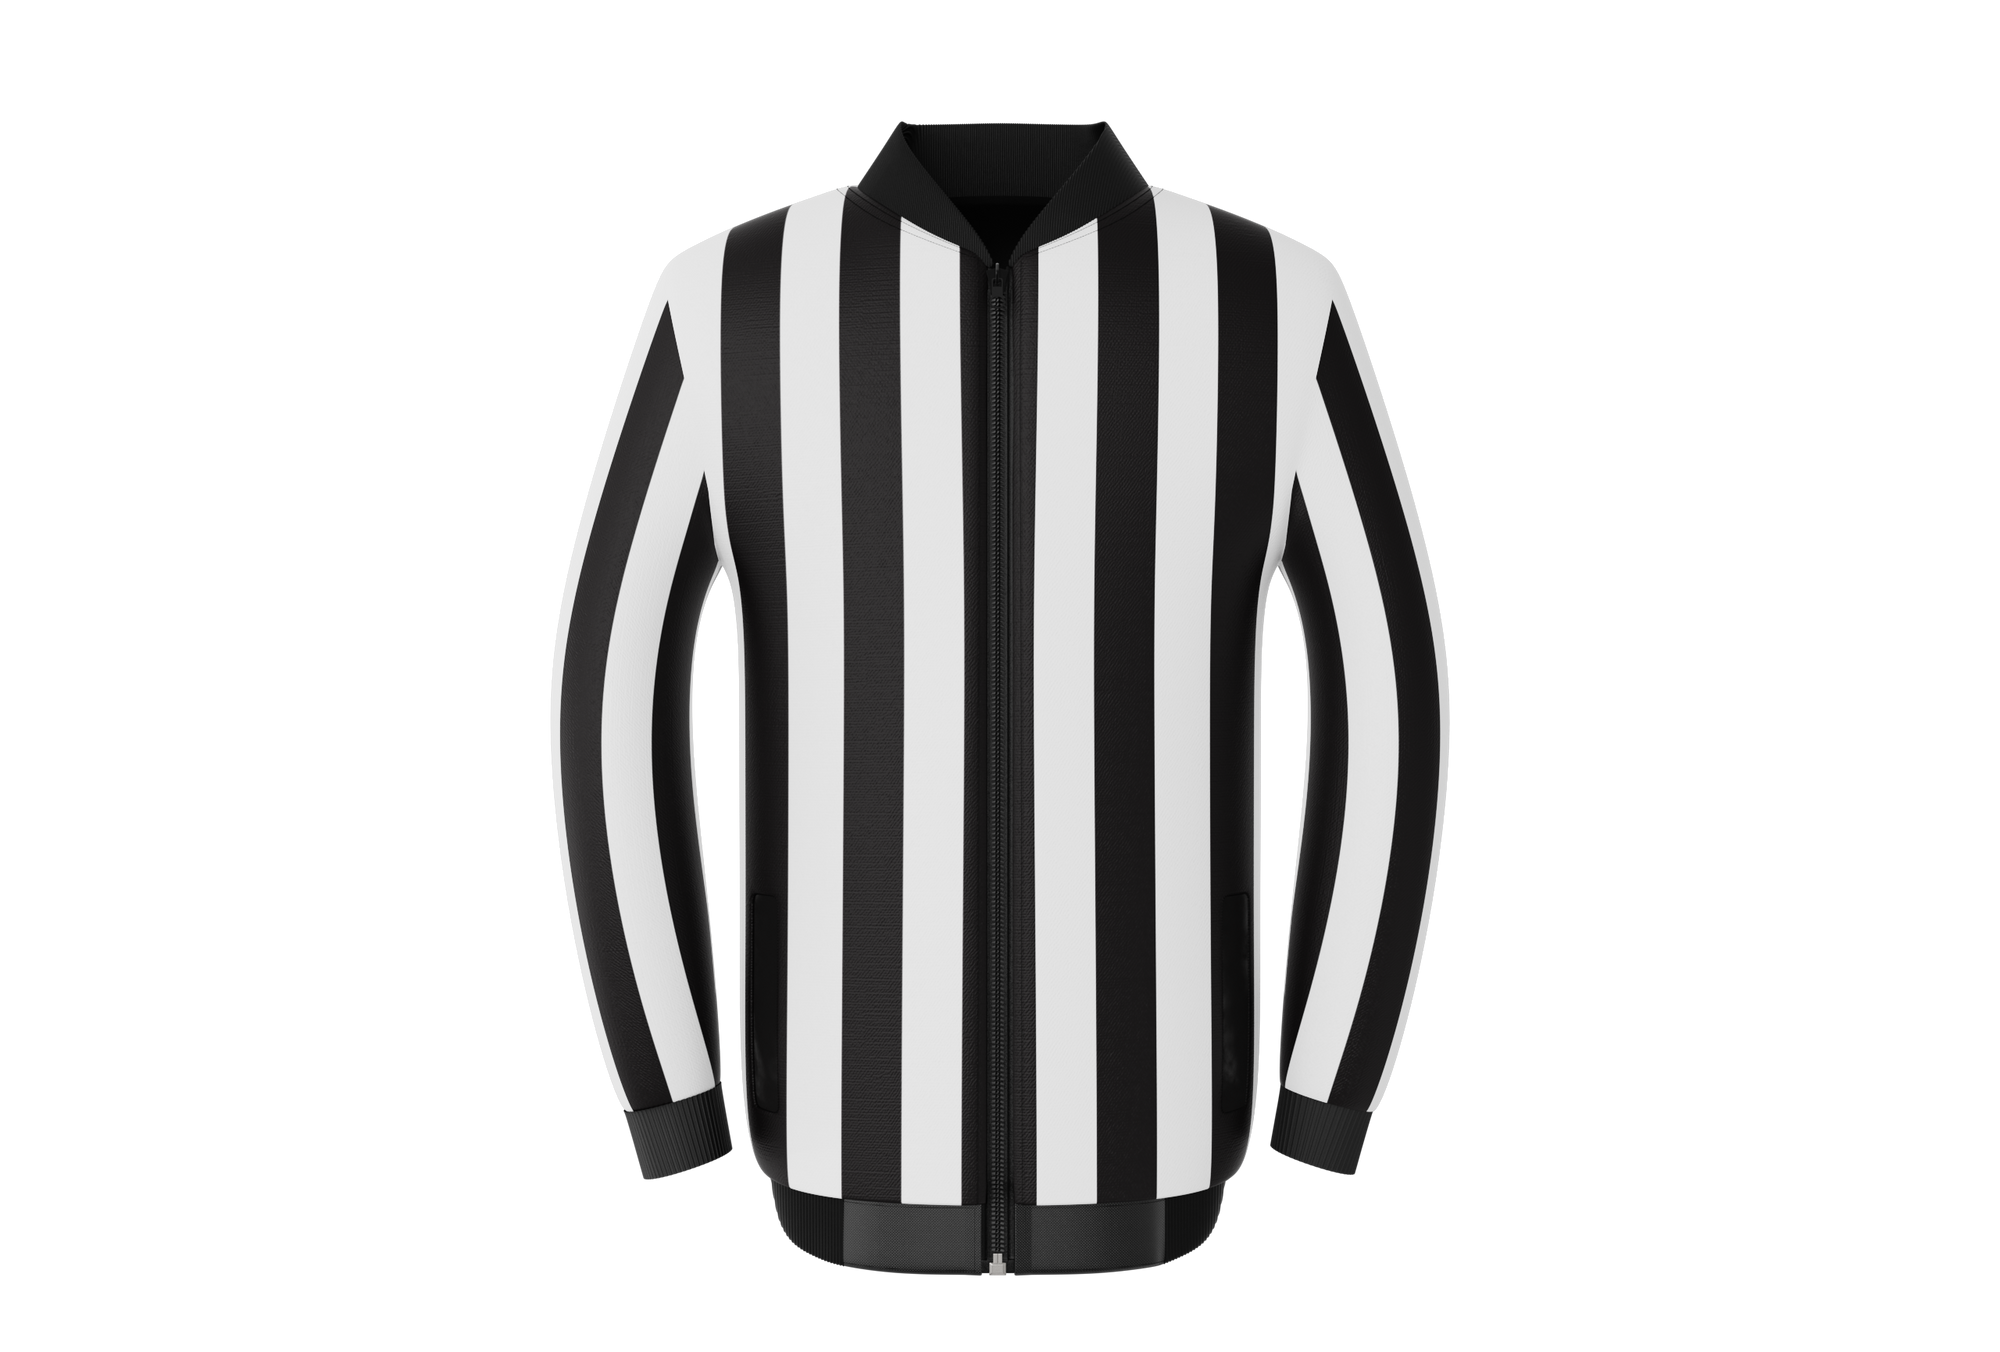 2" Stripe Football Referee Reversible Jacket 